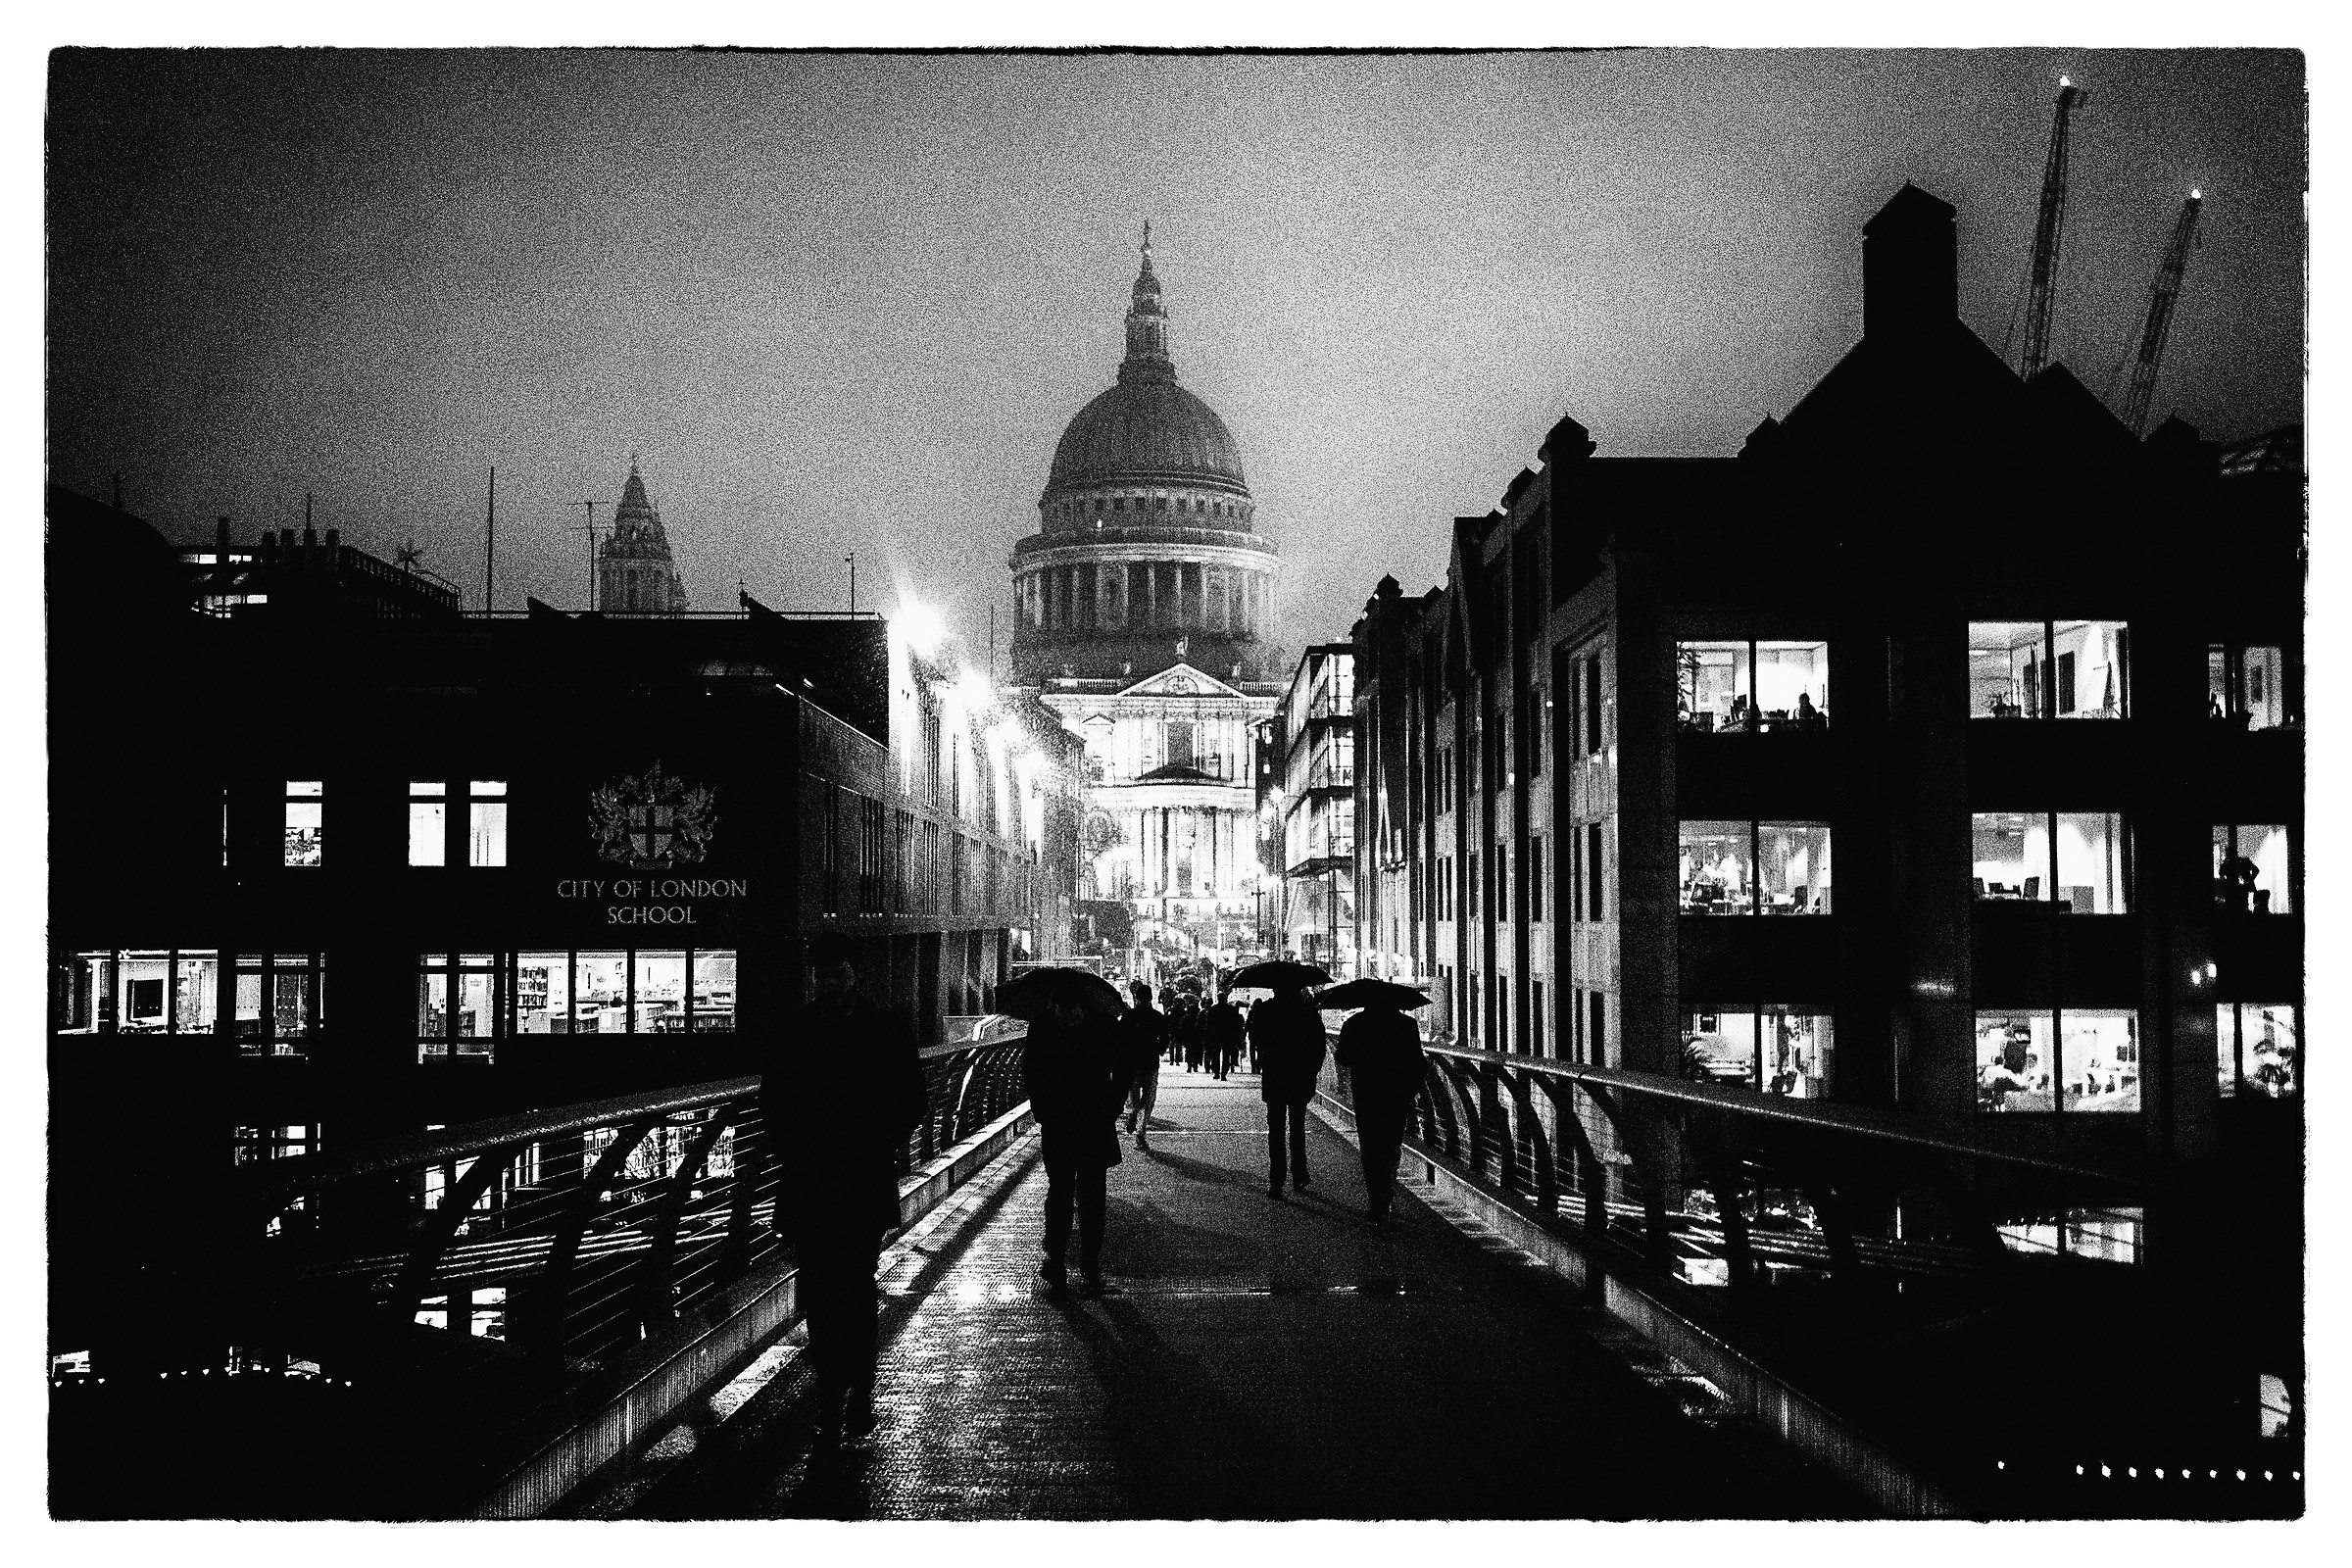 A Winter's Night In London...